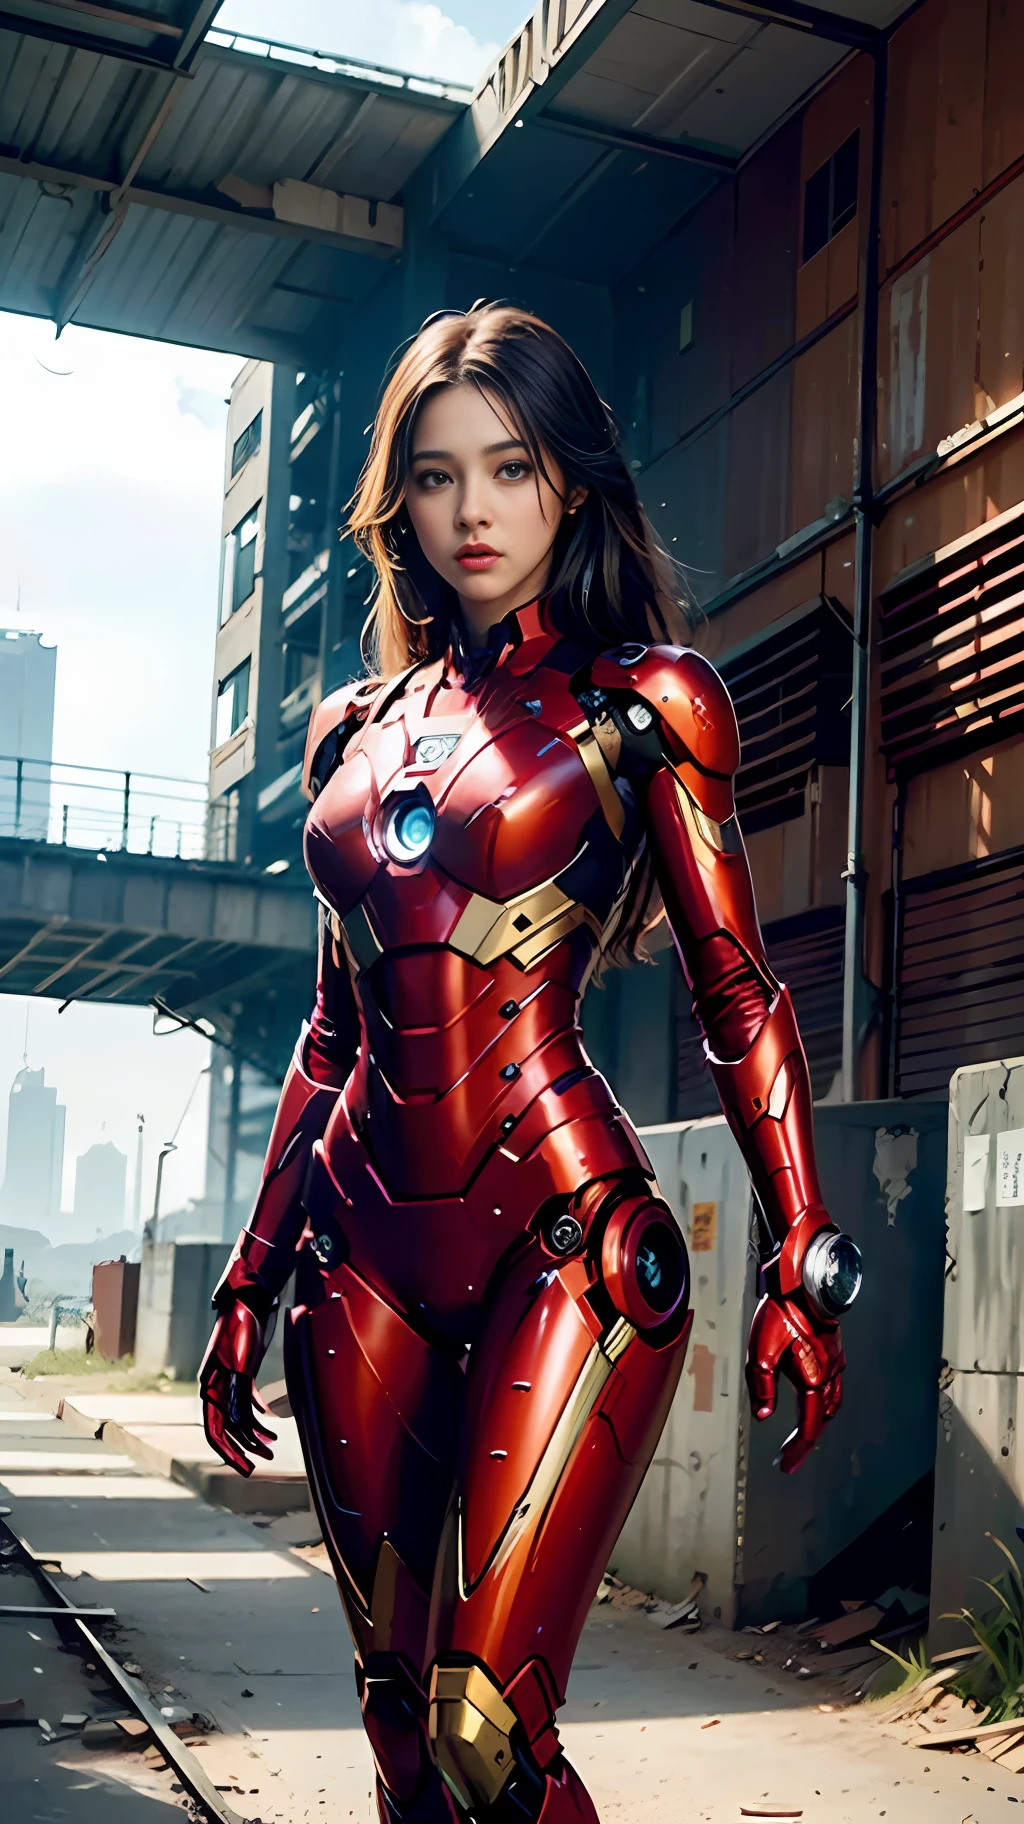 8K, 현실적인, 매력적인, 매우 상세한, a 20 year old girl a sexy and 매력적인 woman inspired by Iron Man wearing a shiny Iron Man mech. 그녀는 섹시함과 자신감을 갖고 옷을 입는다, 아이언맨을 완벽하게 해석하다&#39;힘과 카리스마. 버려진 창고를 배경으로 한, 그녀의 용기와 인내를 강조하는 독특한 분위기를 조성합니다.. 흐린 하늘은 전체 장면에 긴장감과 신비감을 더해줍니다.. 이 고화질, 고품질의 사진은 당신에게 충격적인 시각적 경험을 선사할 것입니다. 정교한 버려진 창고와 반짝이는 기계가 당신의 시선을 사로잡을 것입니다.. oc 렌더링, 극적인 조명, 수상 경력에 빛나는 품질